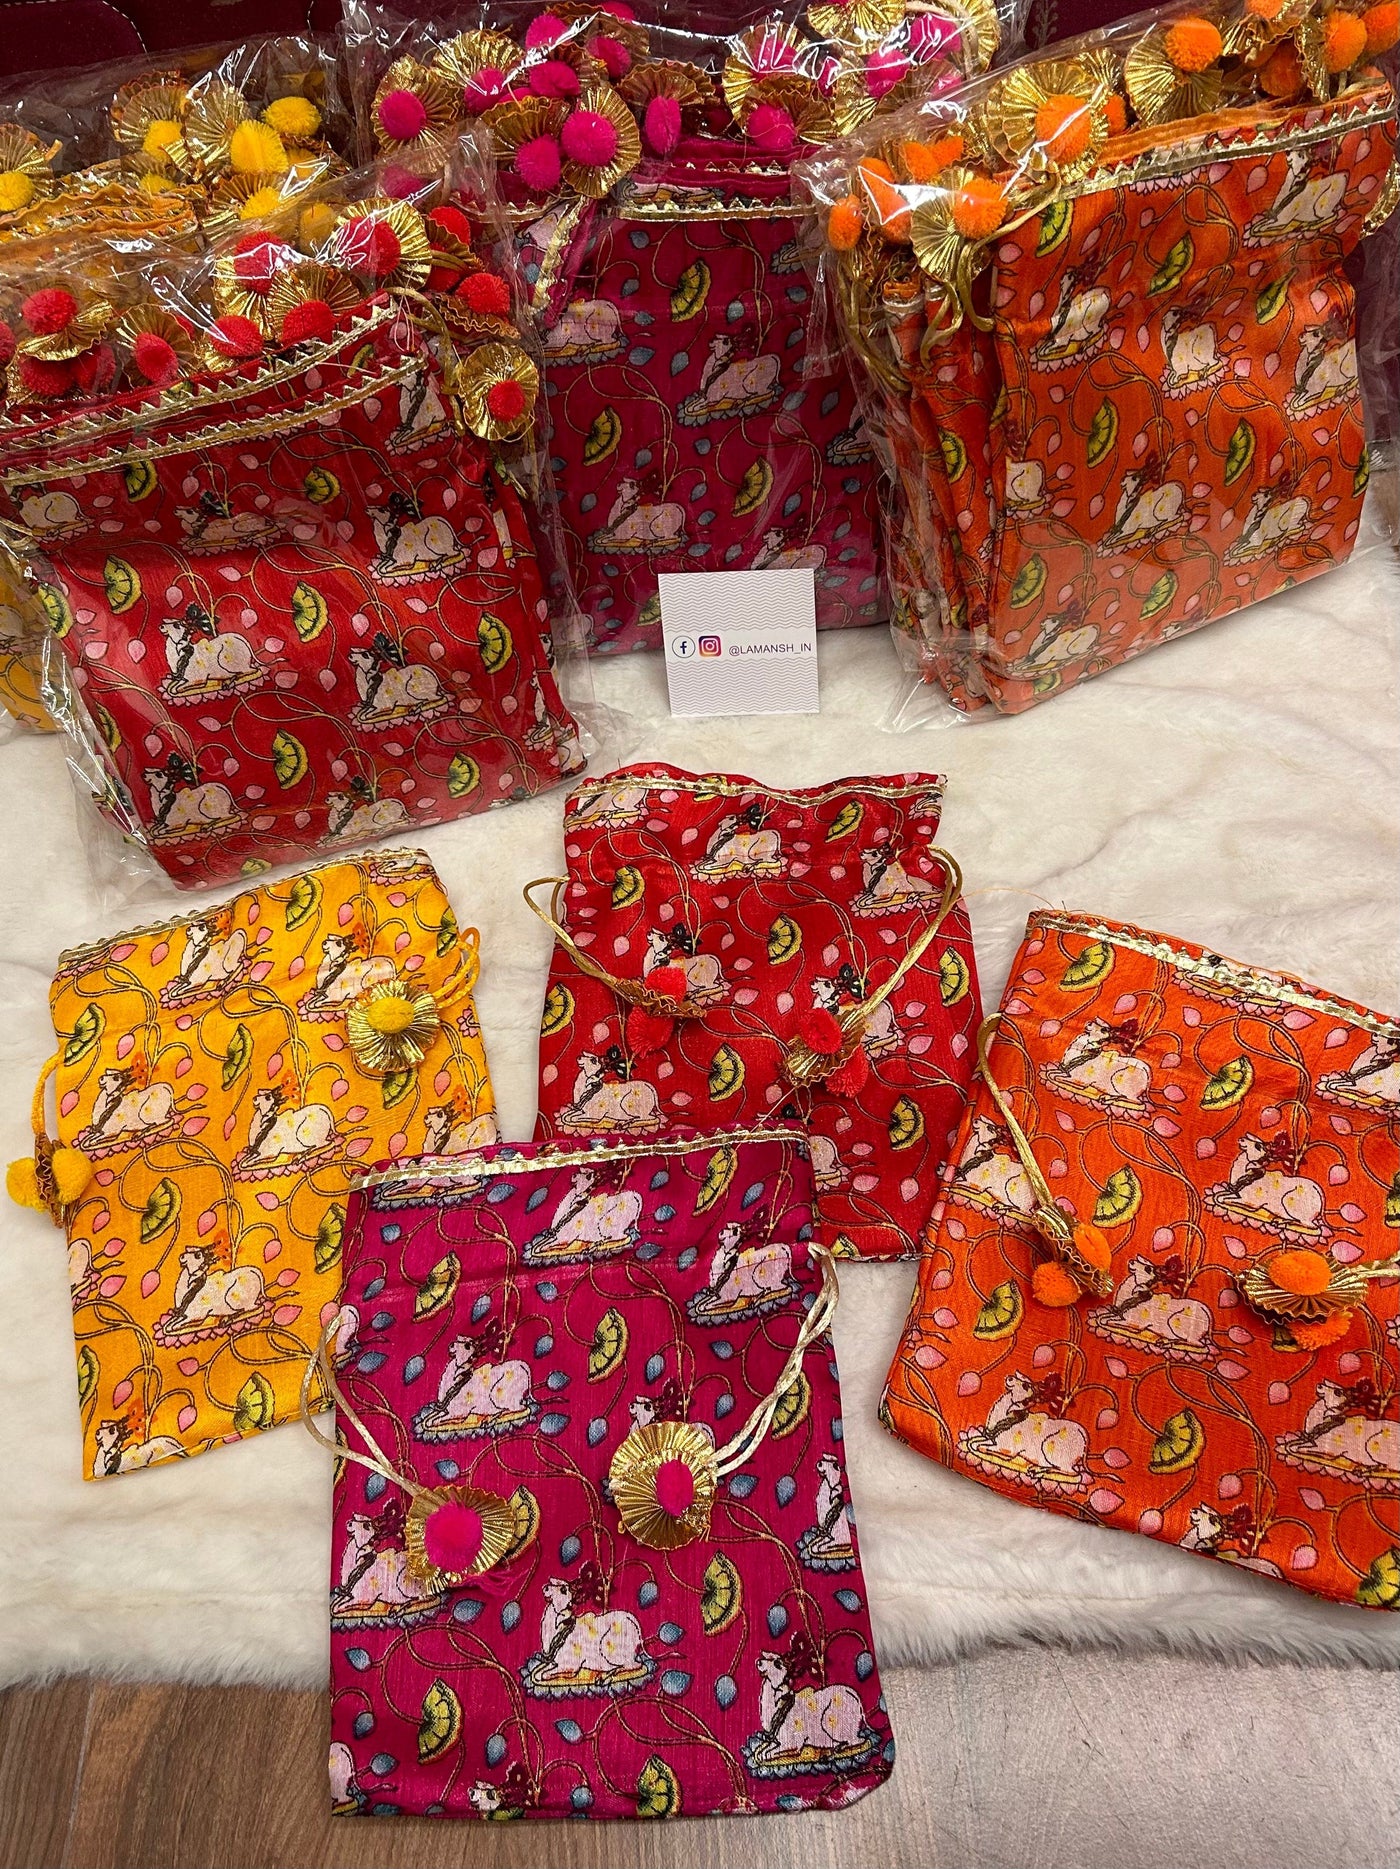 35 Rs each on buying 🏷in bulk | Call 📞 at 8619550223 Women's Potli Bag LAMANSH® 8*10 inch Pichwai Potli bags for Return Gifts packing Giveaways 🎁 & Favours / Shagun Pouch Return Gifts for Haldi mehendi roka wedding